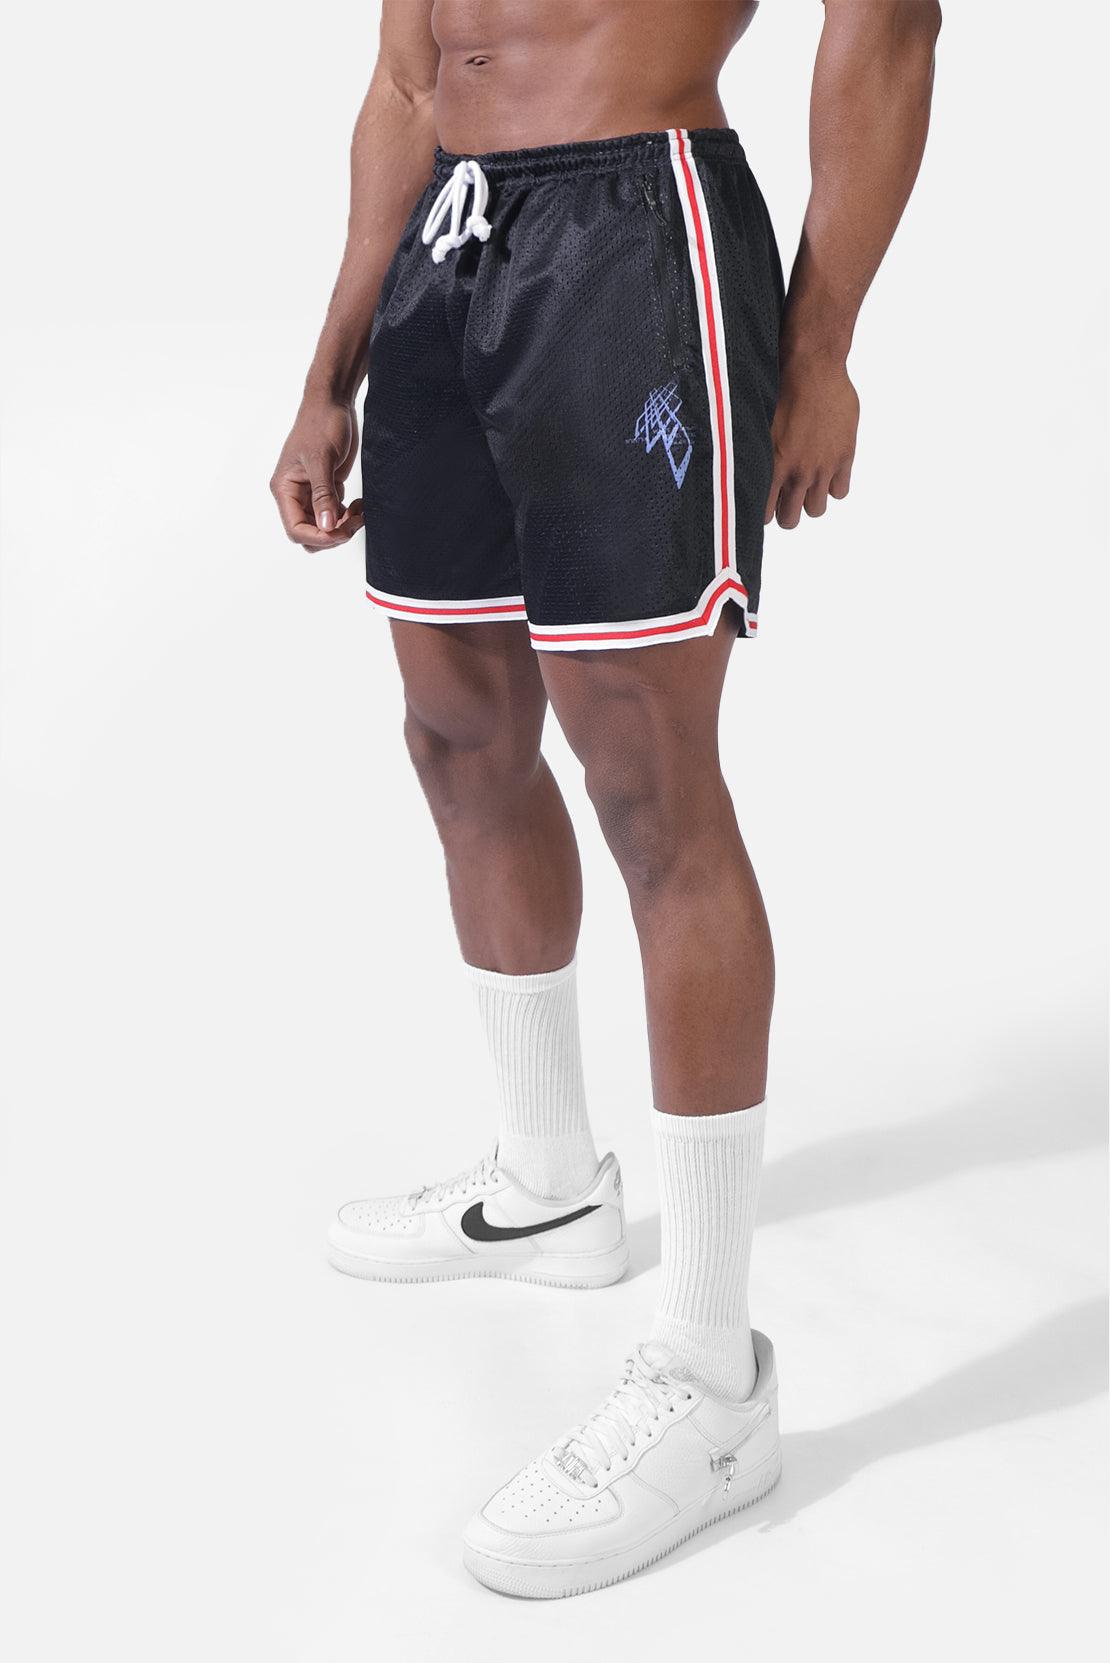 NBA Reload Raptors Swingman Shorts - Eight One